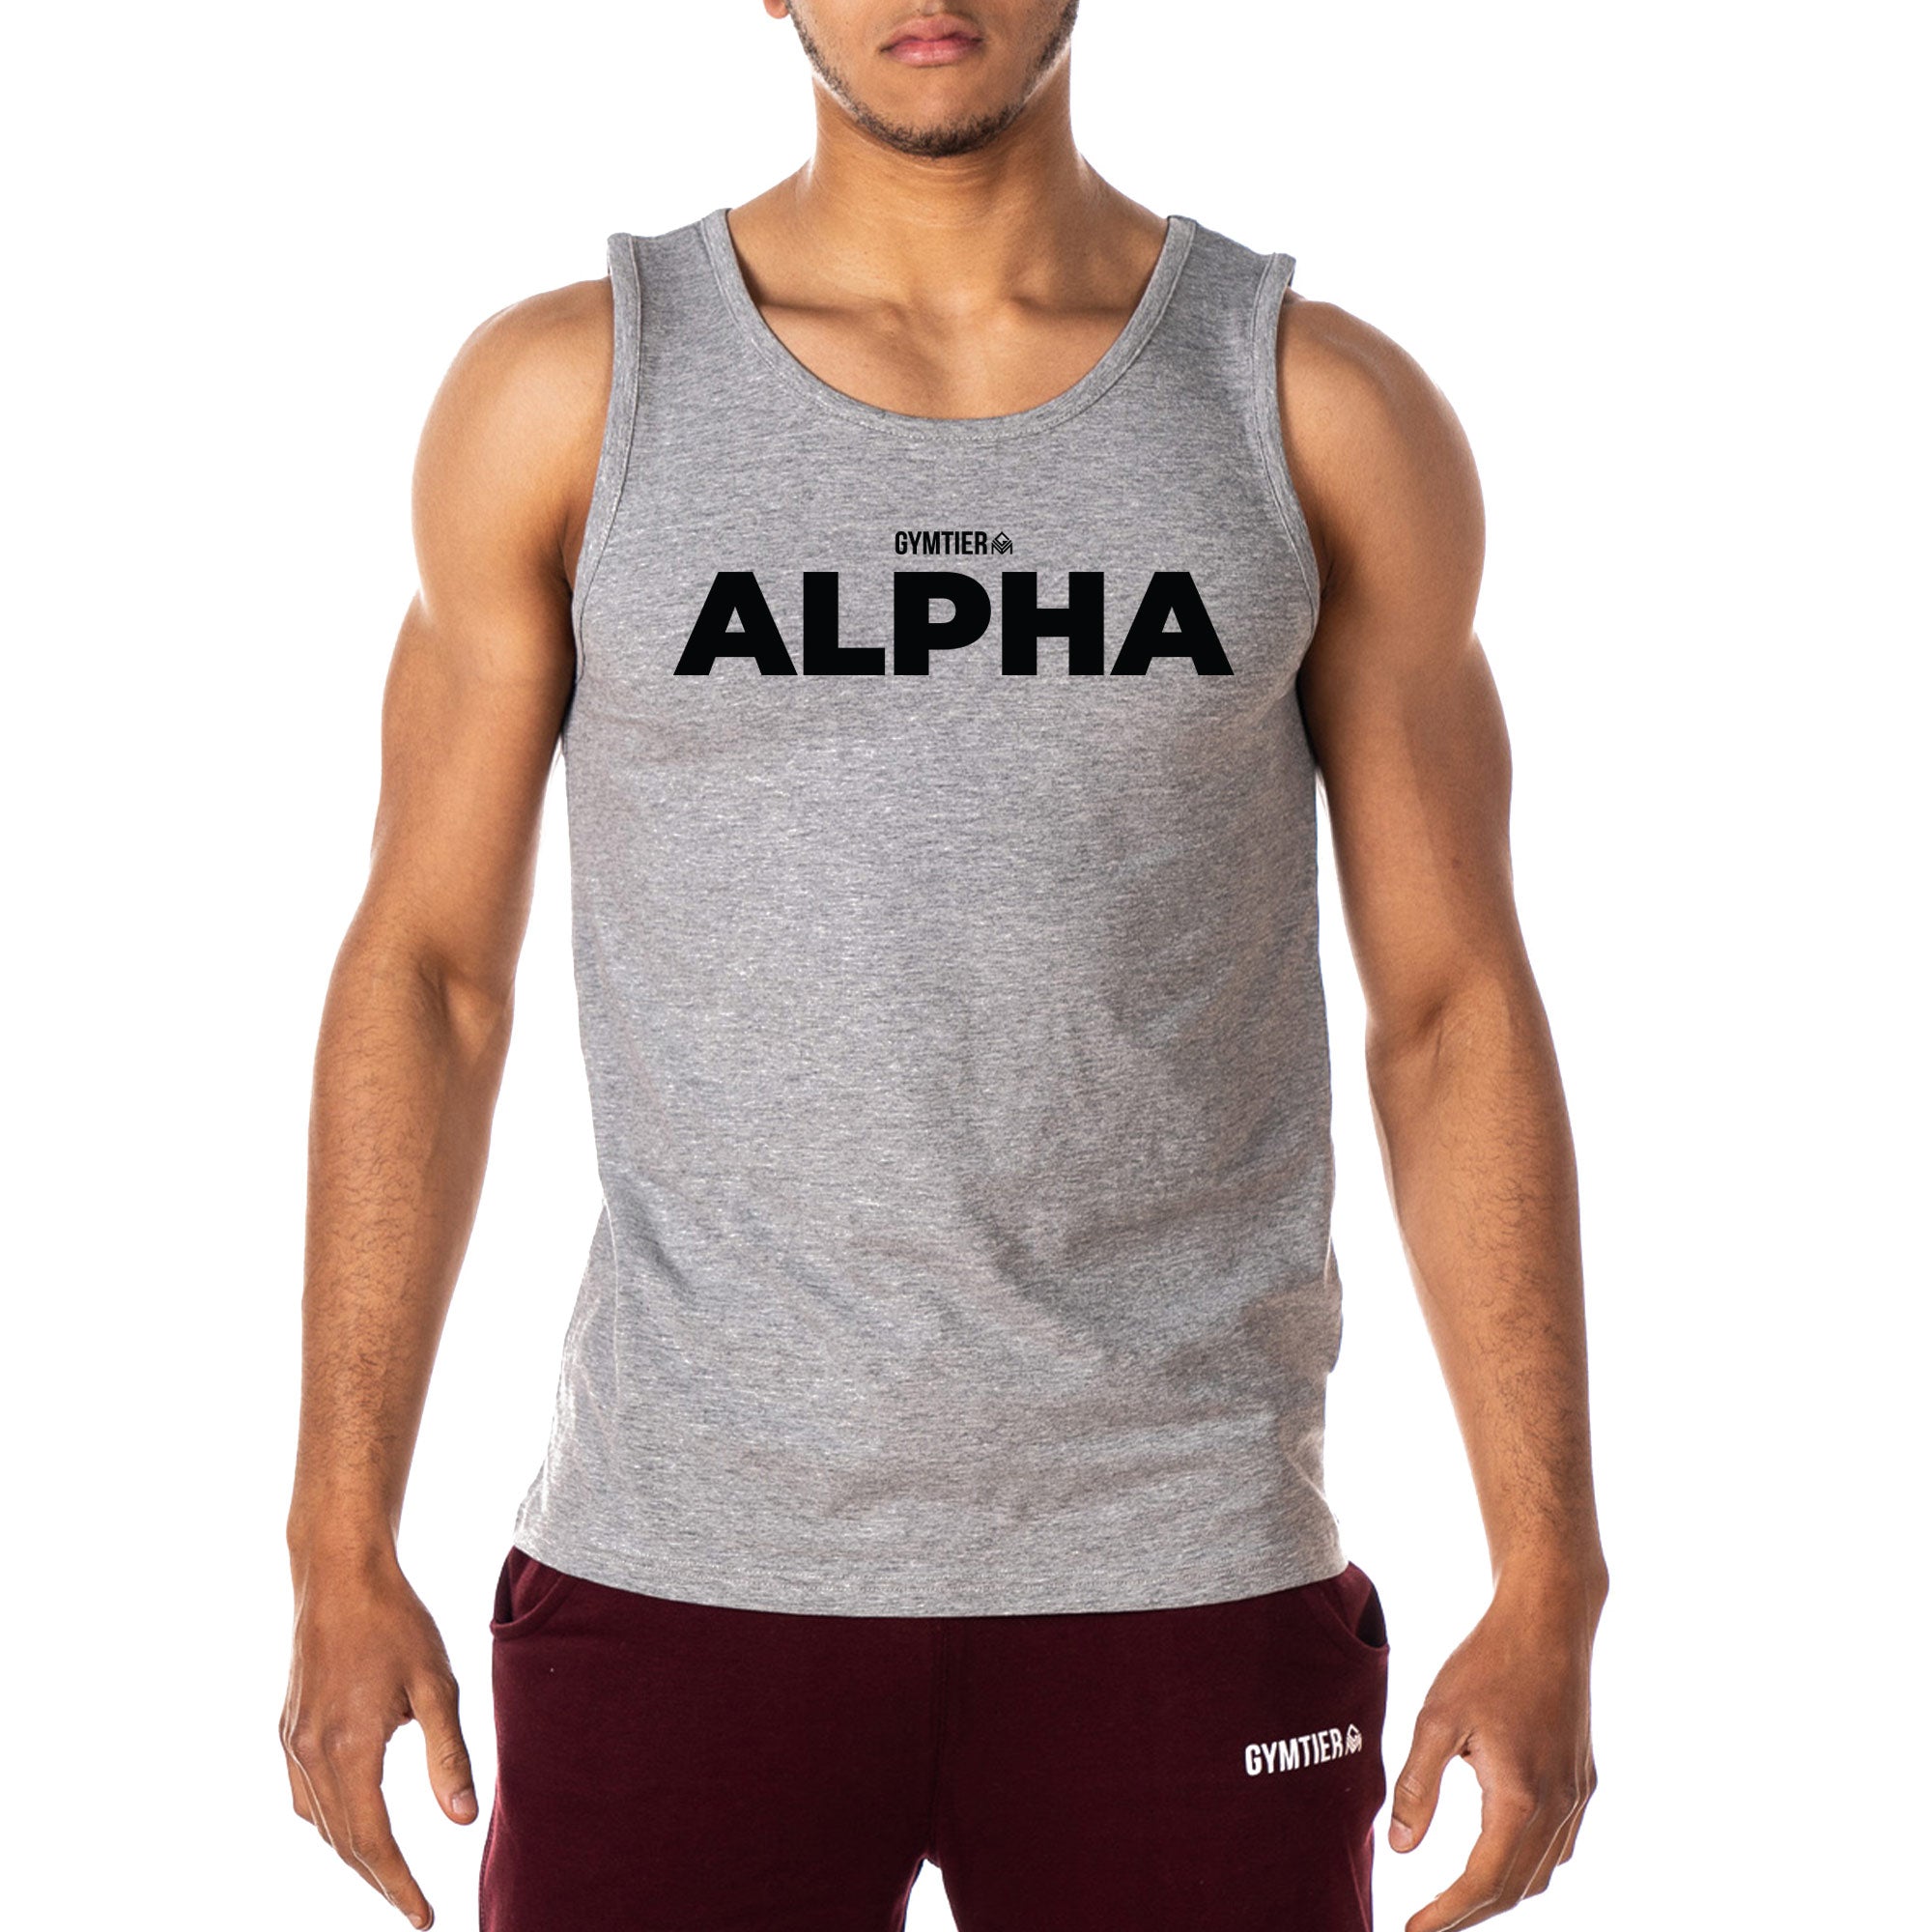 GYMTIER Alpha Gym Vest